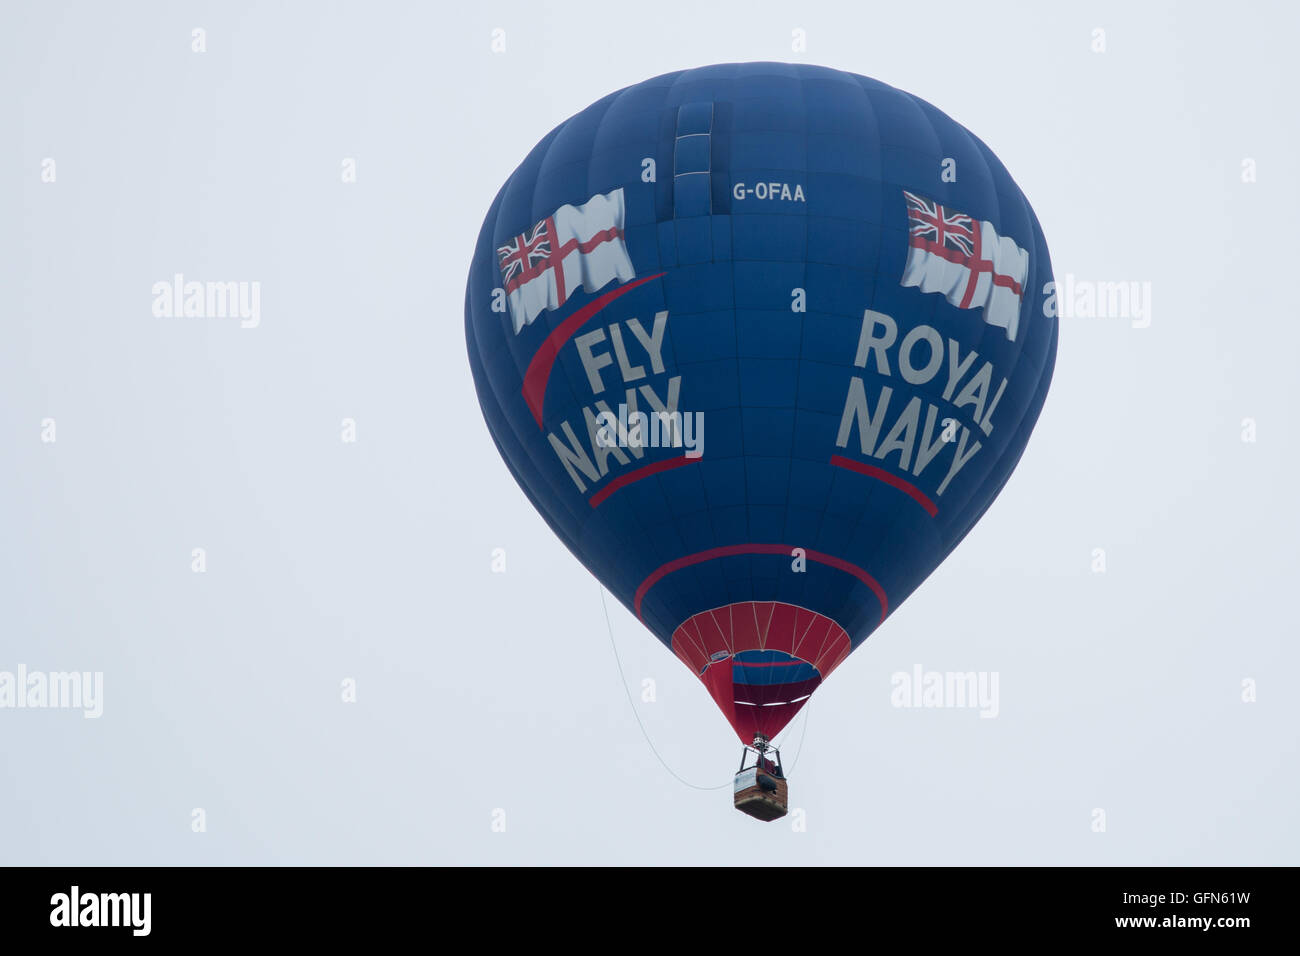 Photo of the 'Fly Navy' Royal Navy Hot air balloon Stock Photo